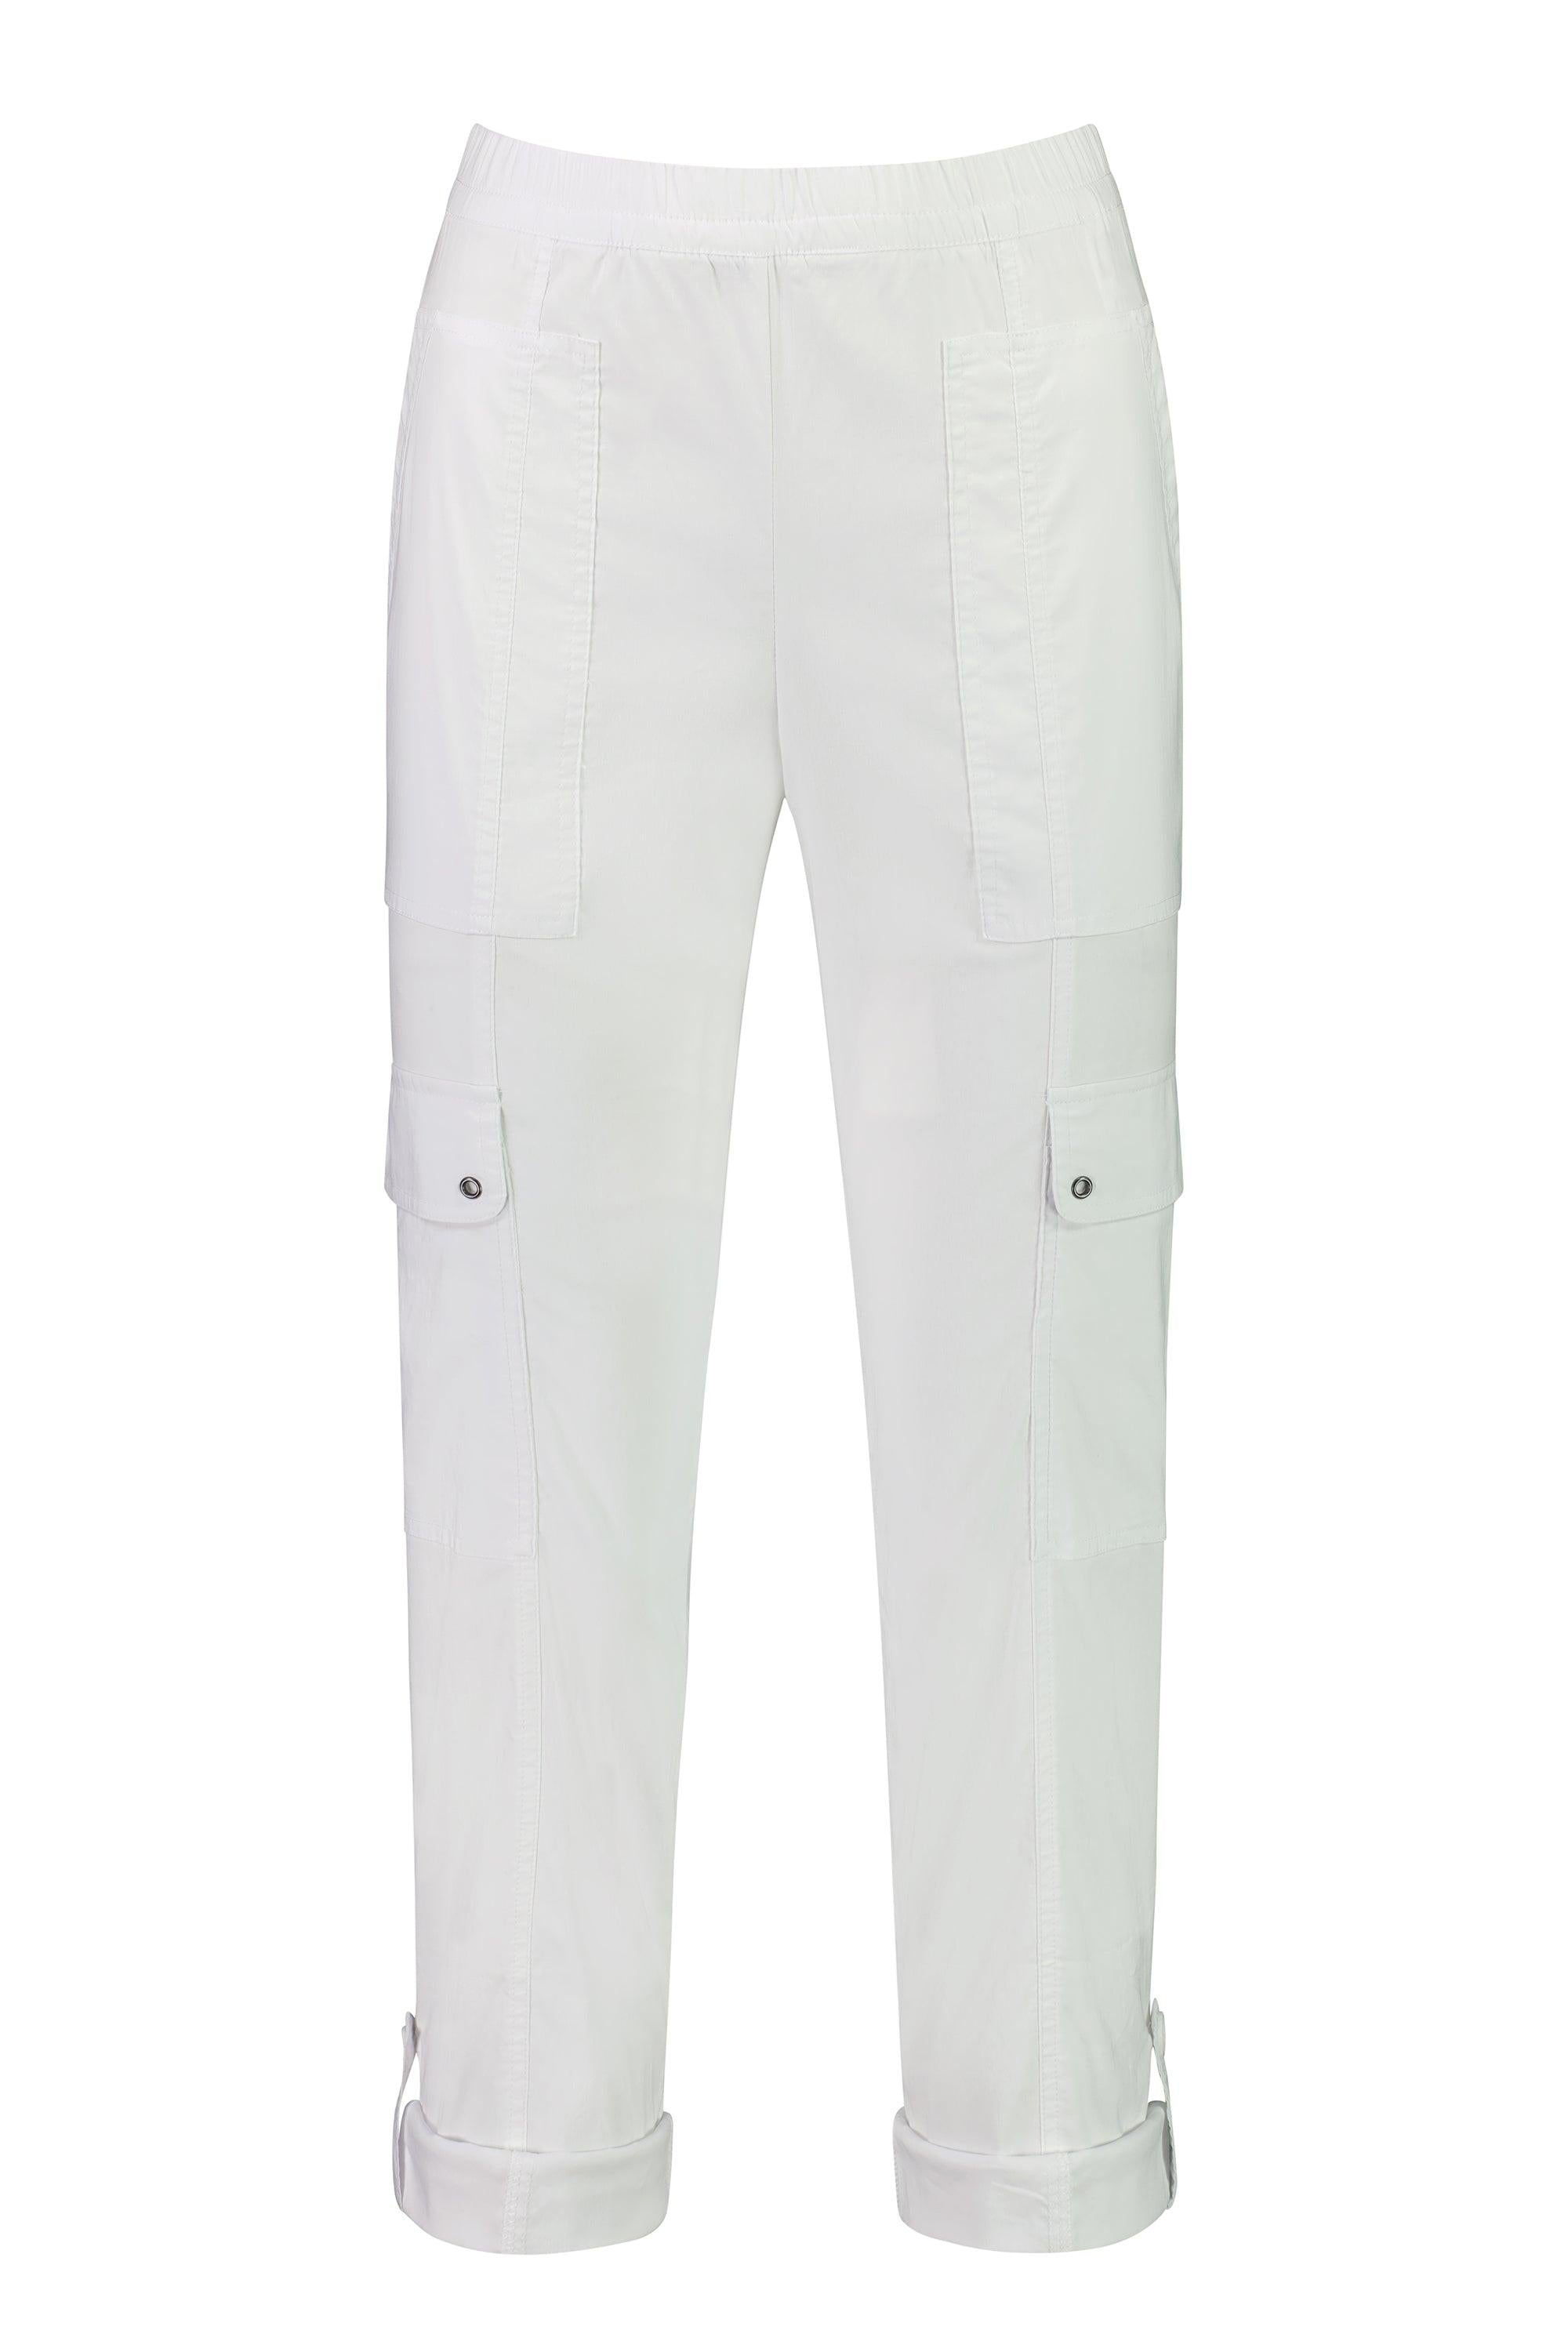 Acrobat Cargo Pant - White - Pant VERGE